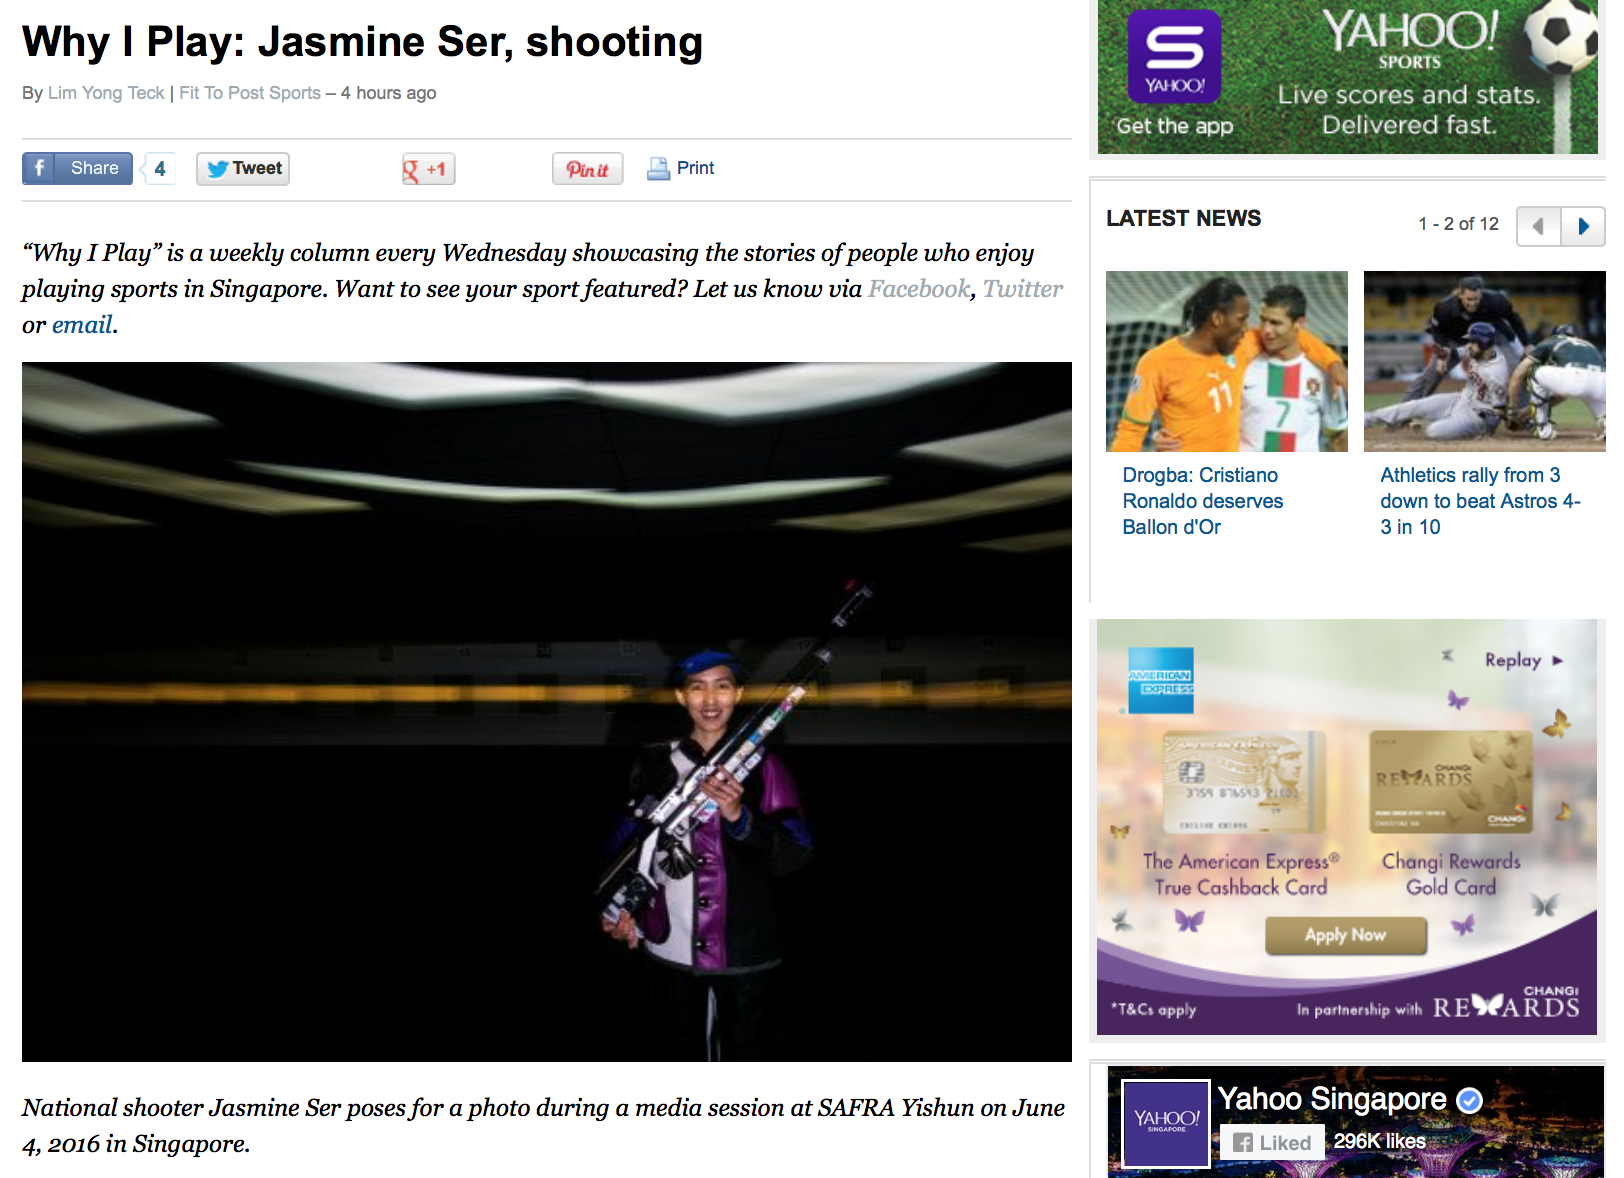  Jasmine Ser feature for Yahoo! (www.yahoo.com) 